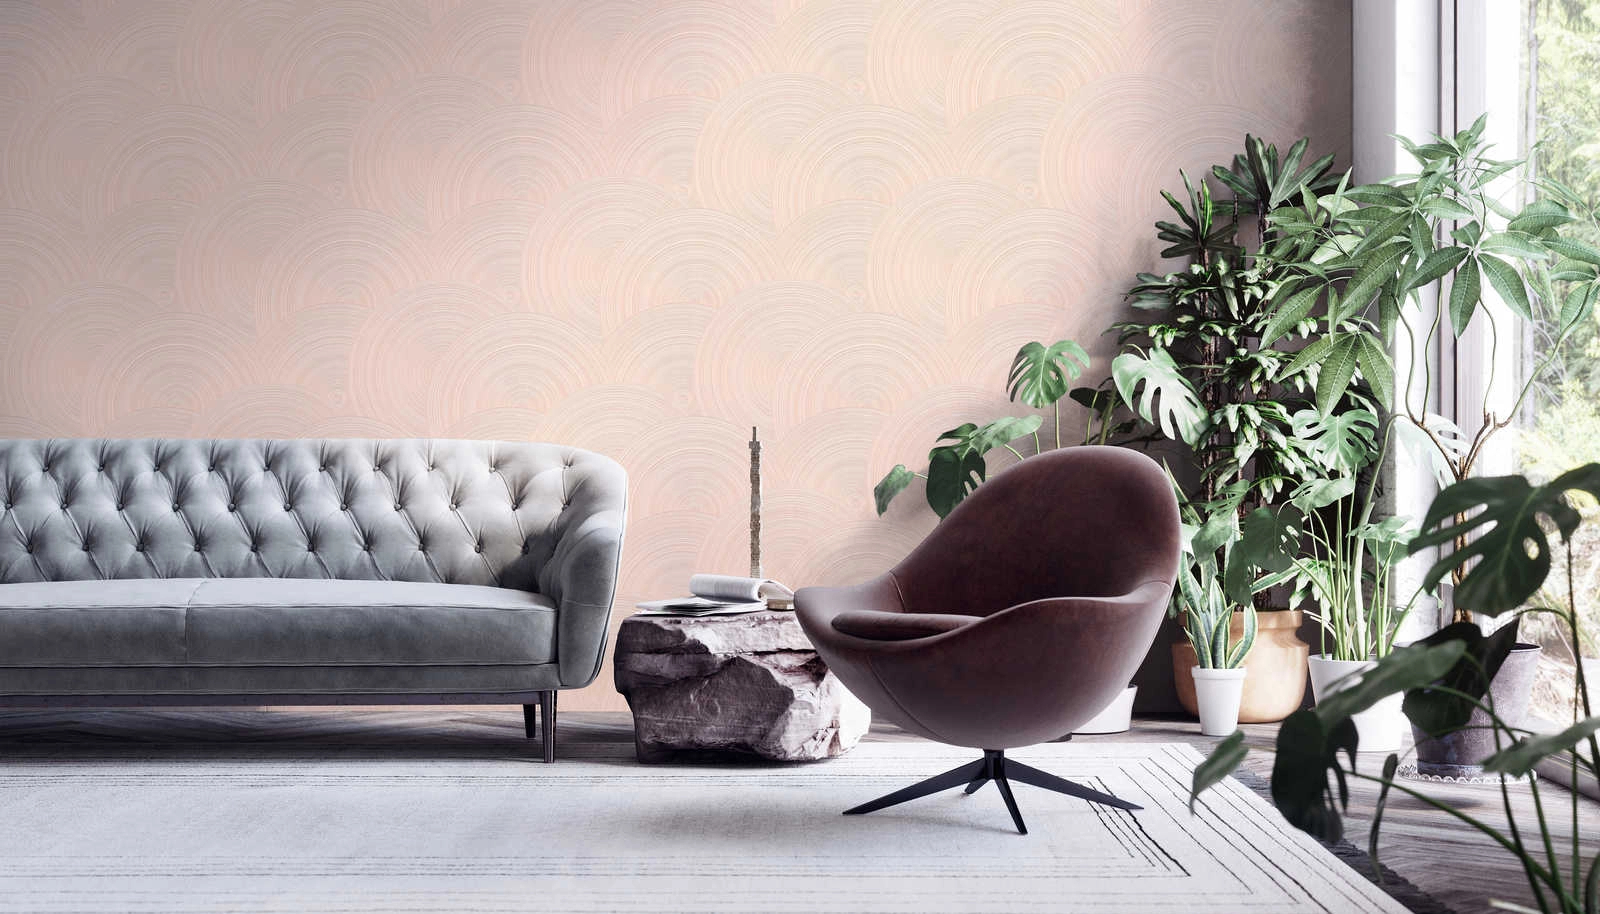 Design tapéta puder rózsaszín félkör geometrikus mintával